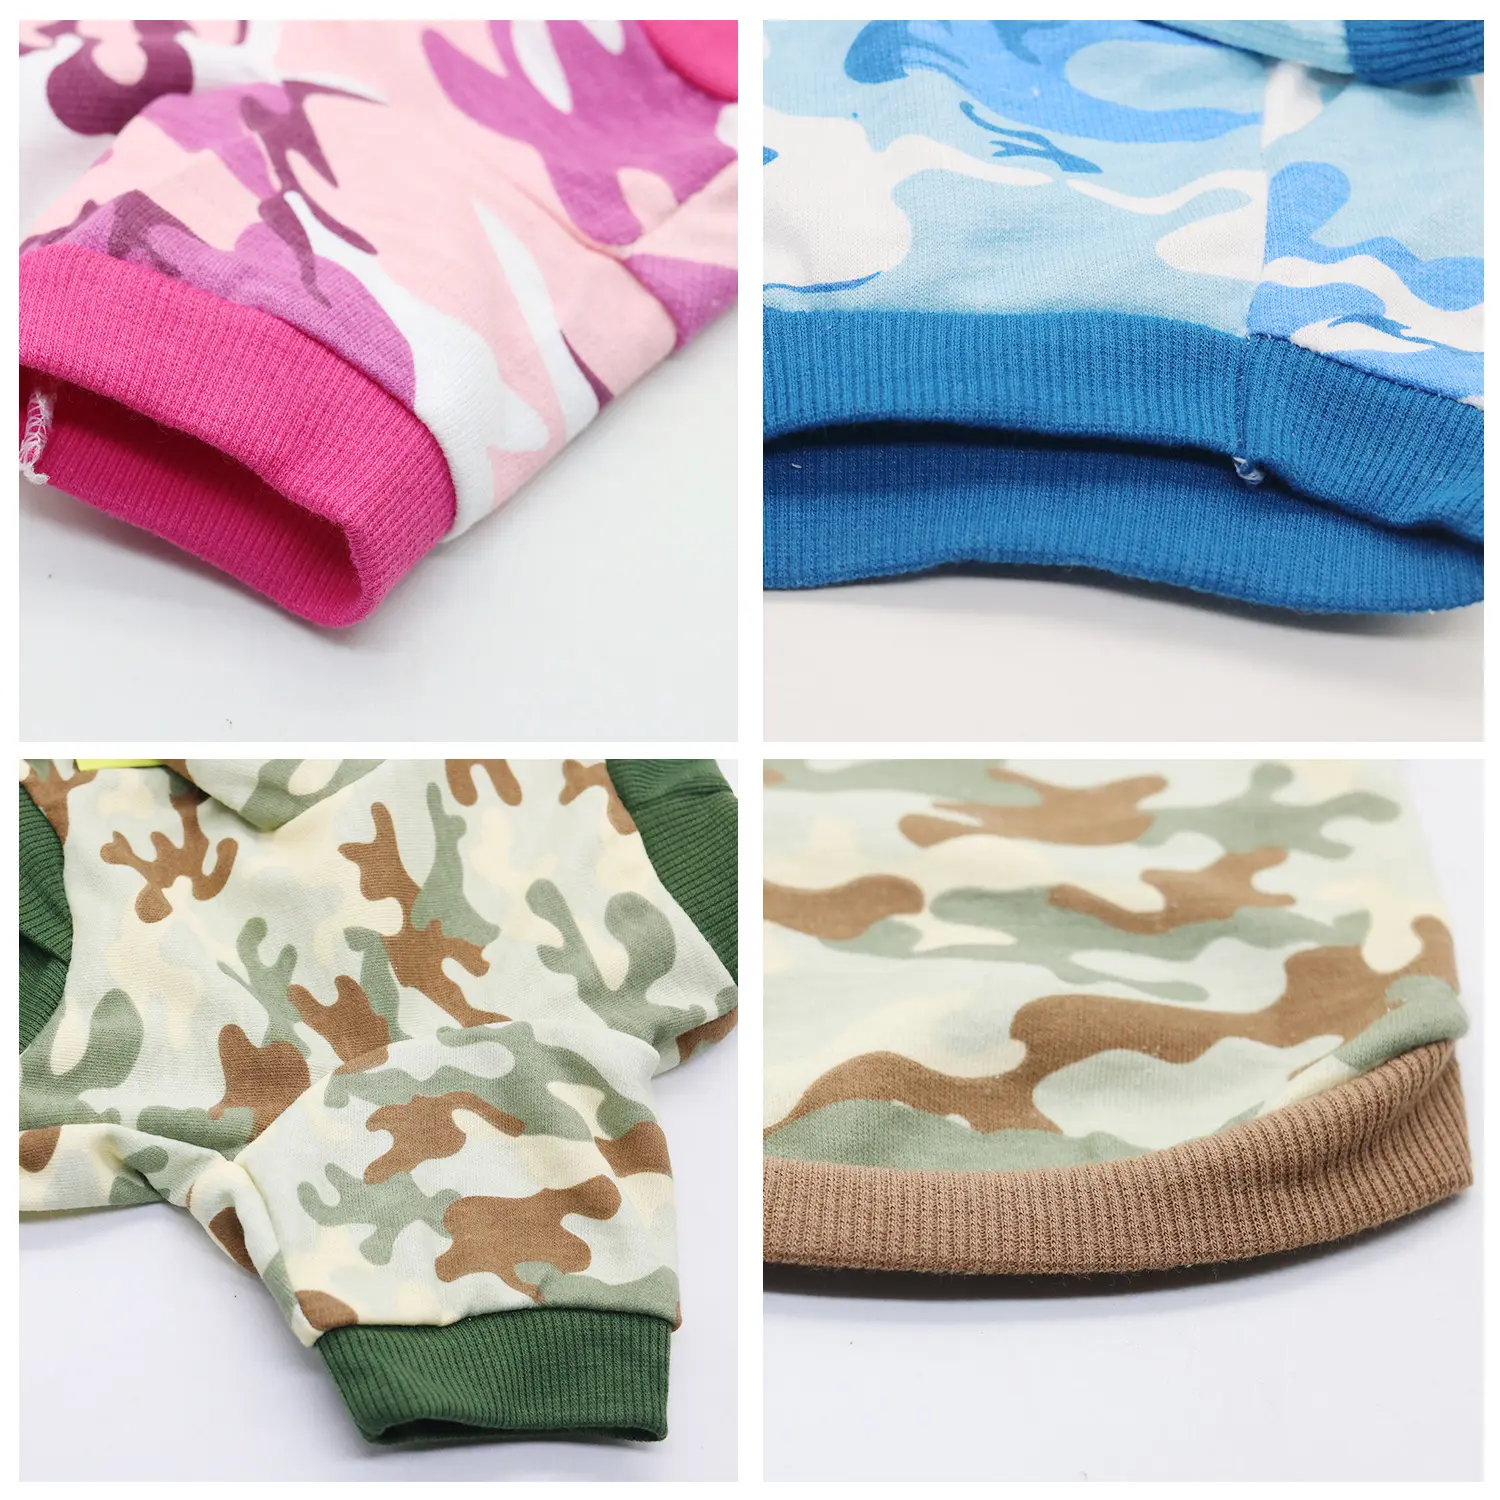 Hot Selling Soft Summer Puppy Vest Fashion Pet clothes Multi Color camouflage Cotton Dog T-shirt